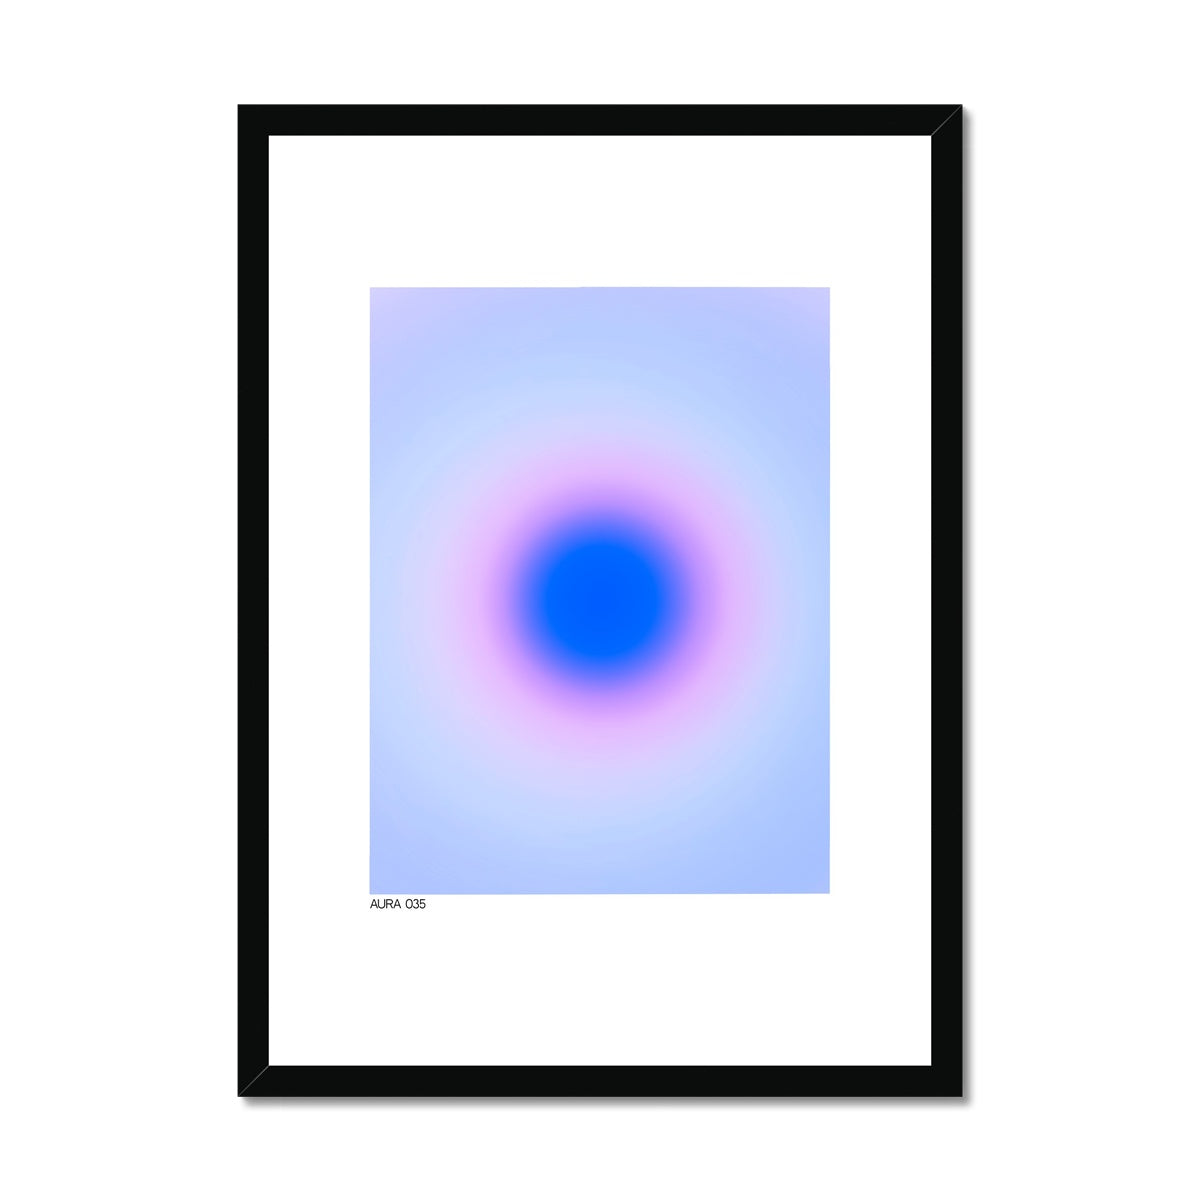 aura 035 Framed & Mounted Print